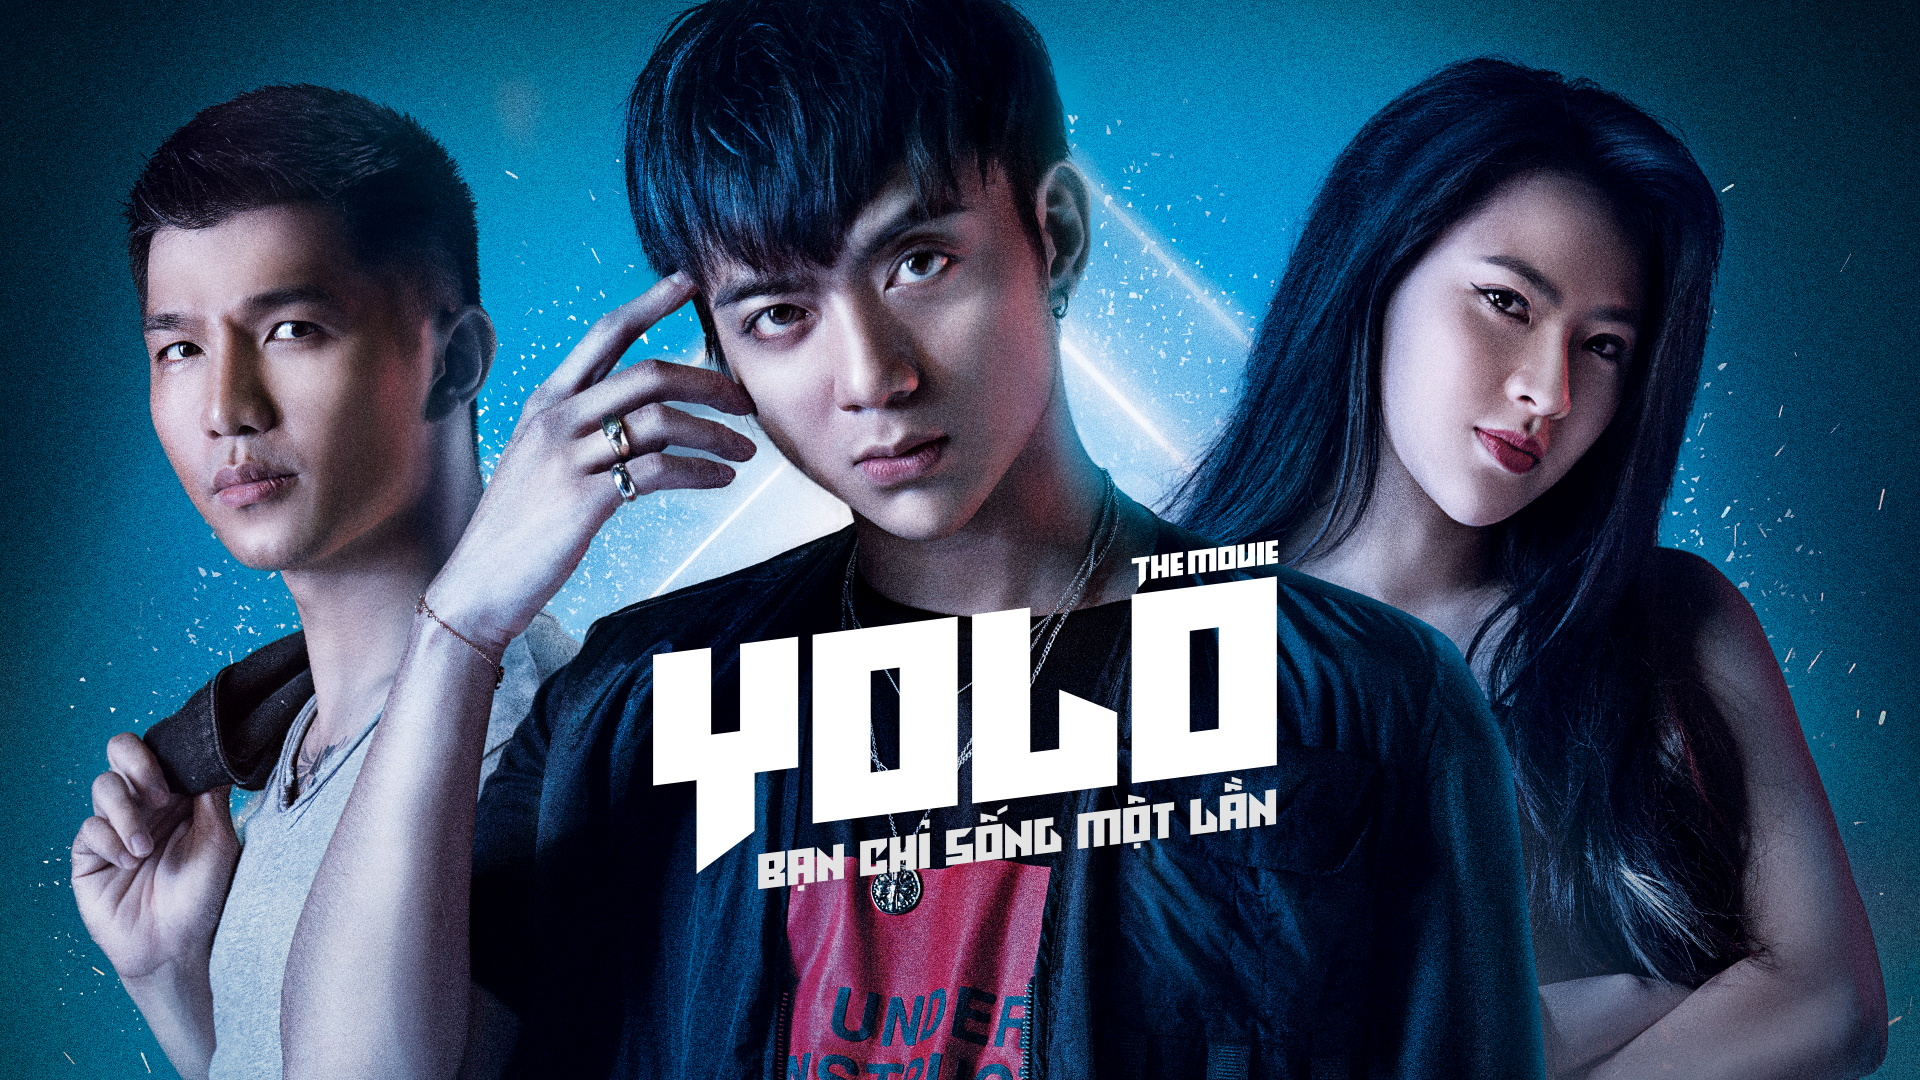 YOLO the Movie / YOLO the Movie (2019)